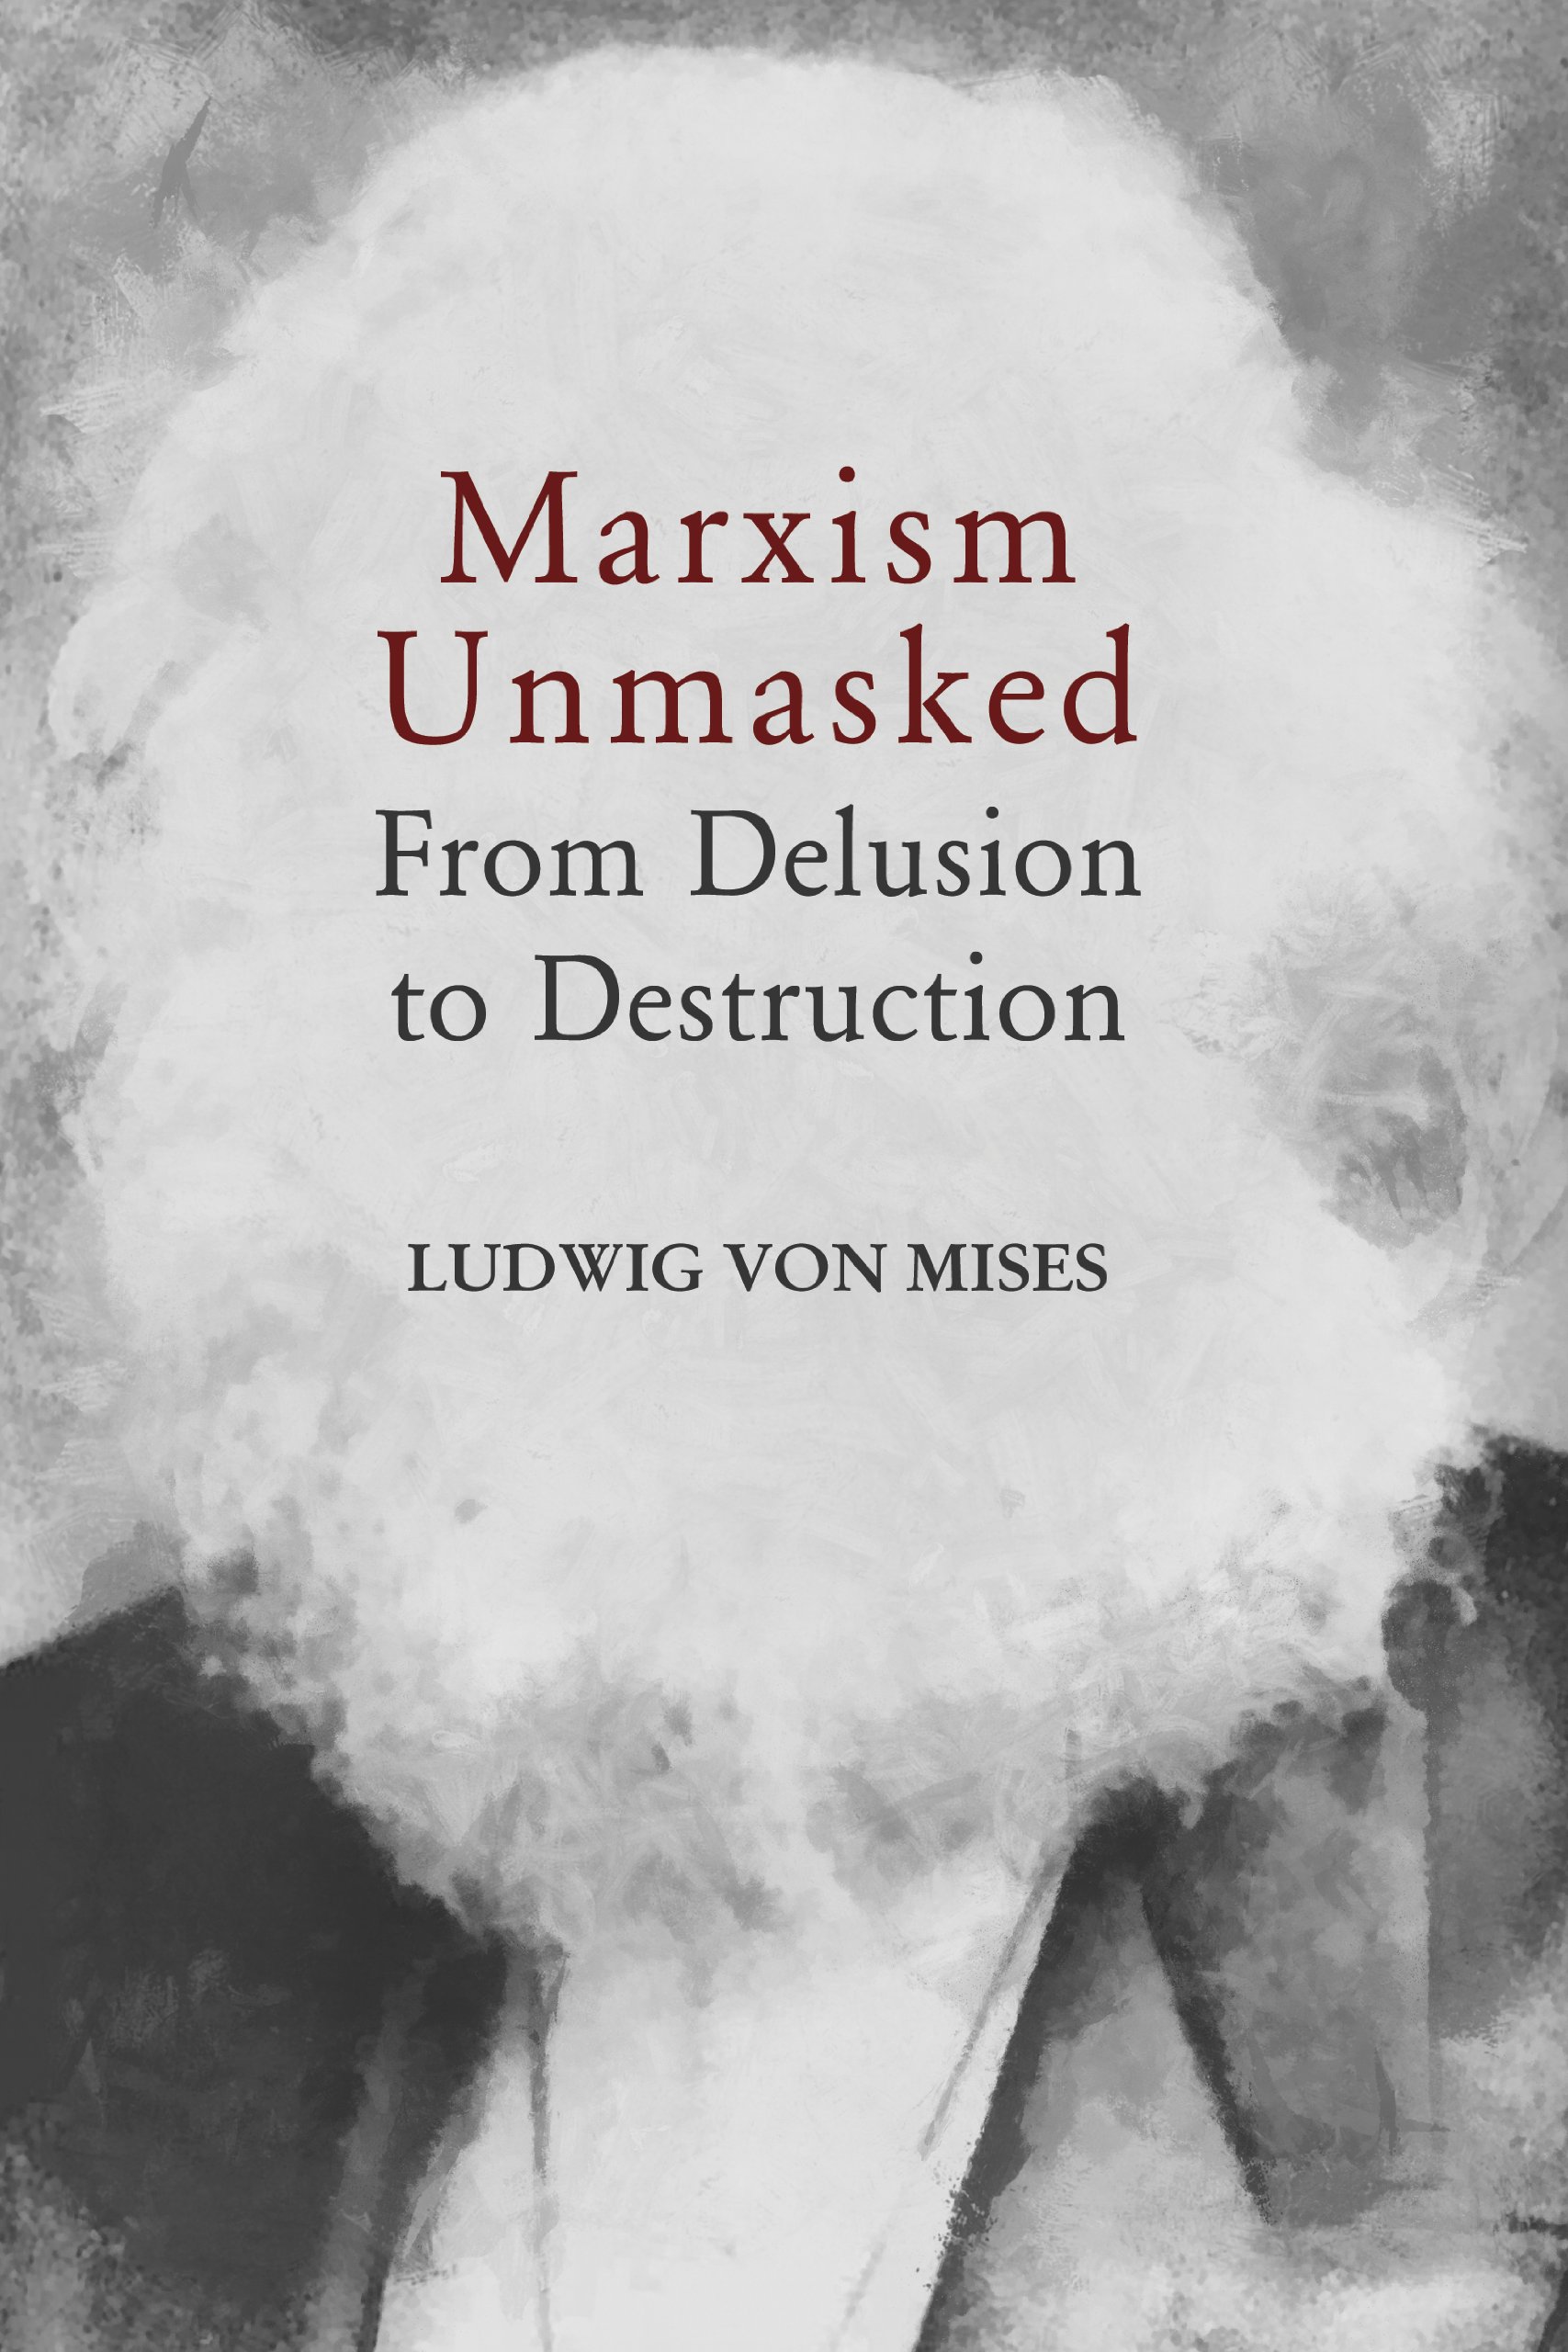 Marxism Unmasked (LvMI)